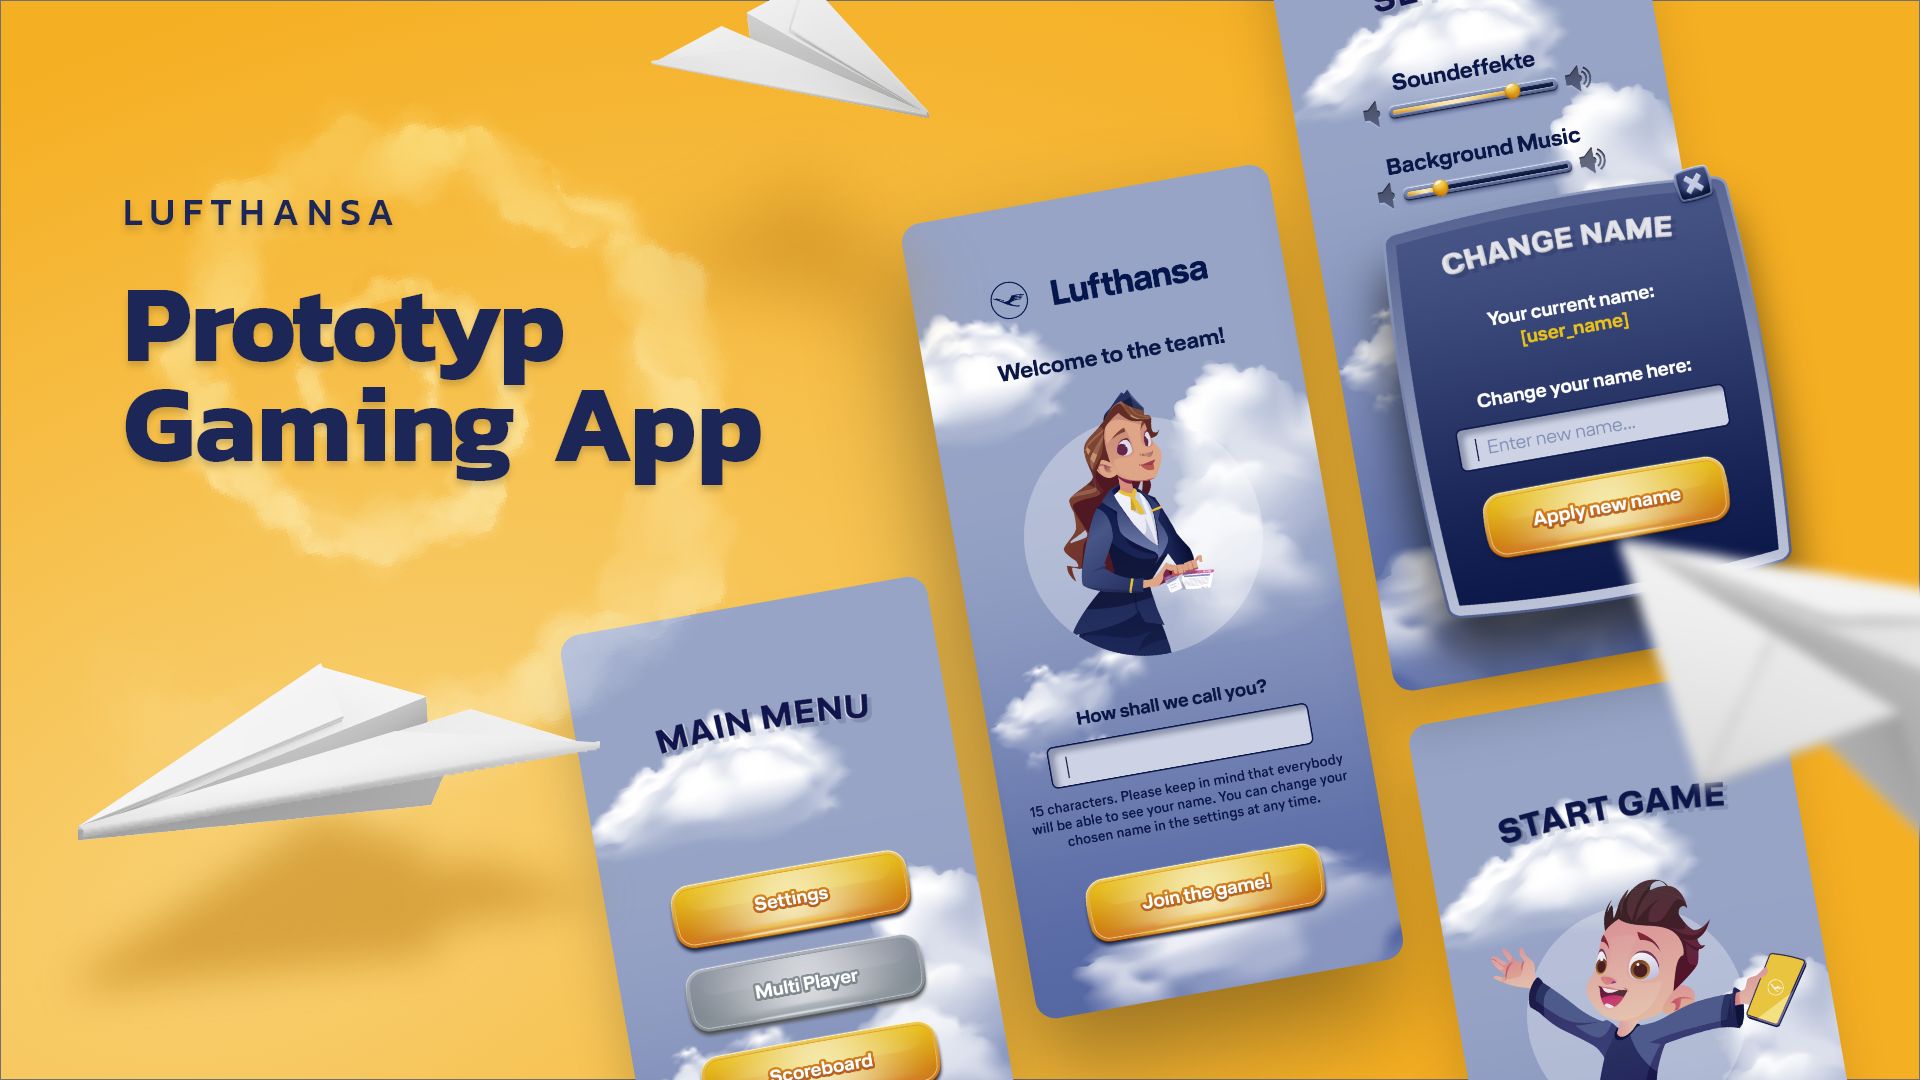 Lufthansa App & Box